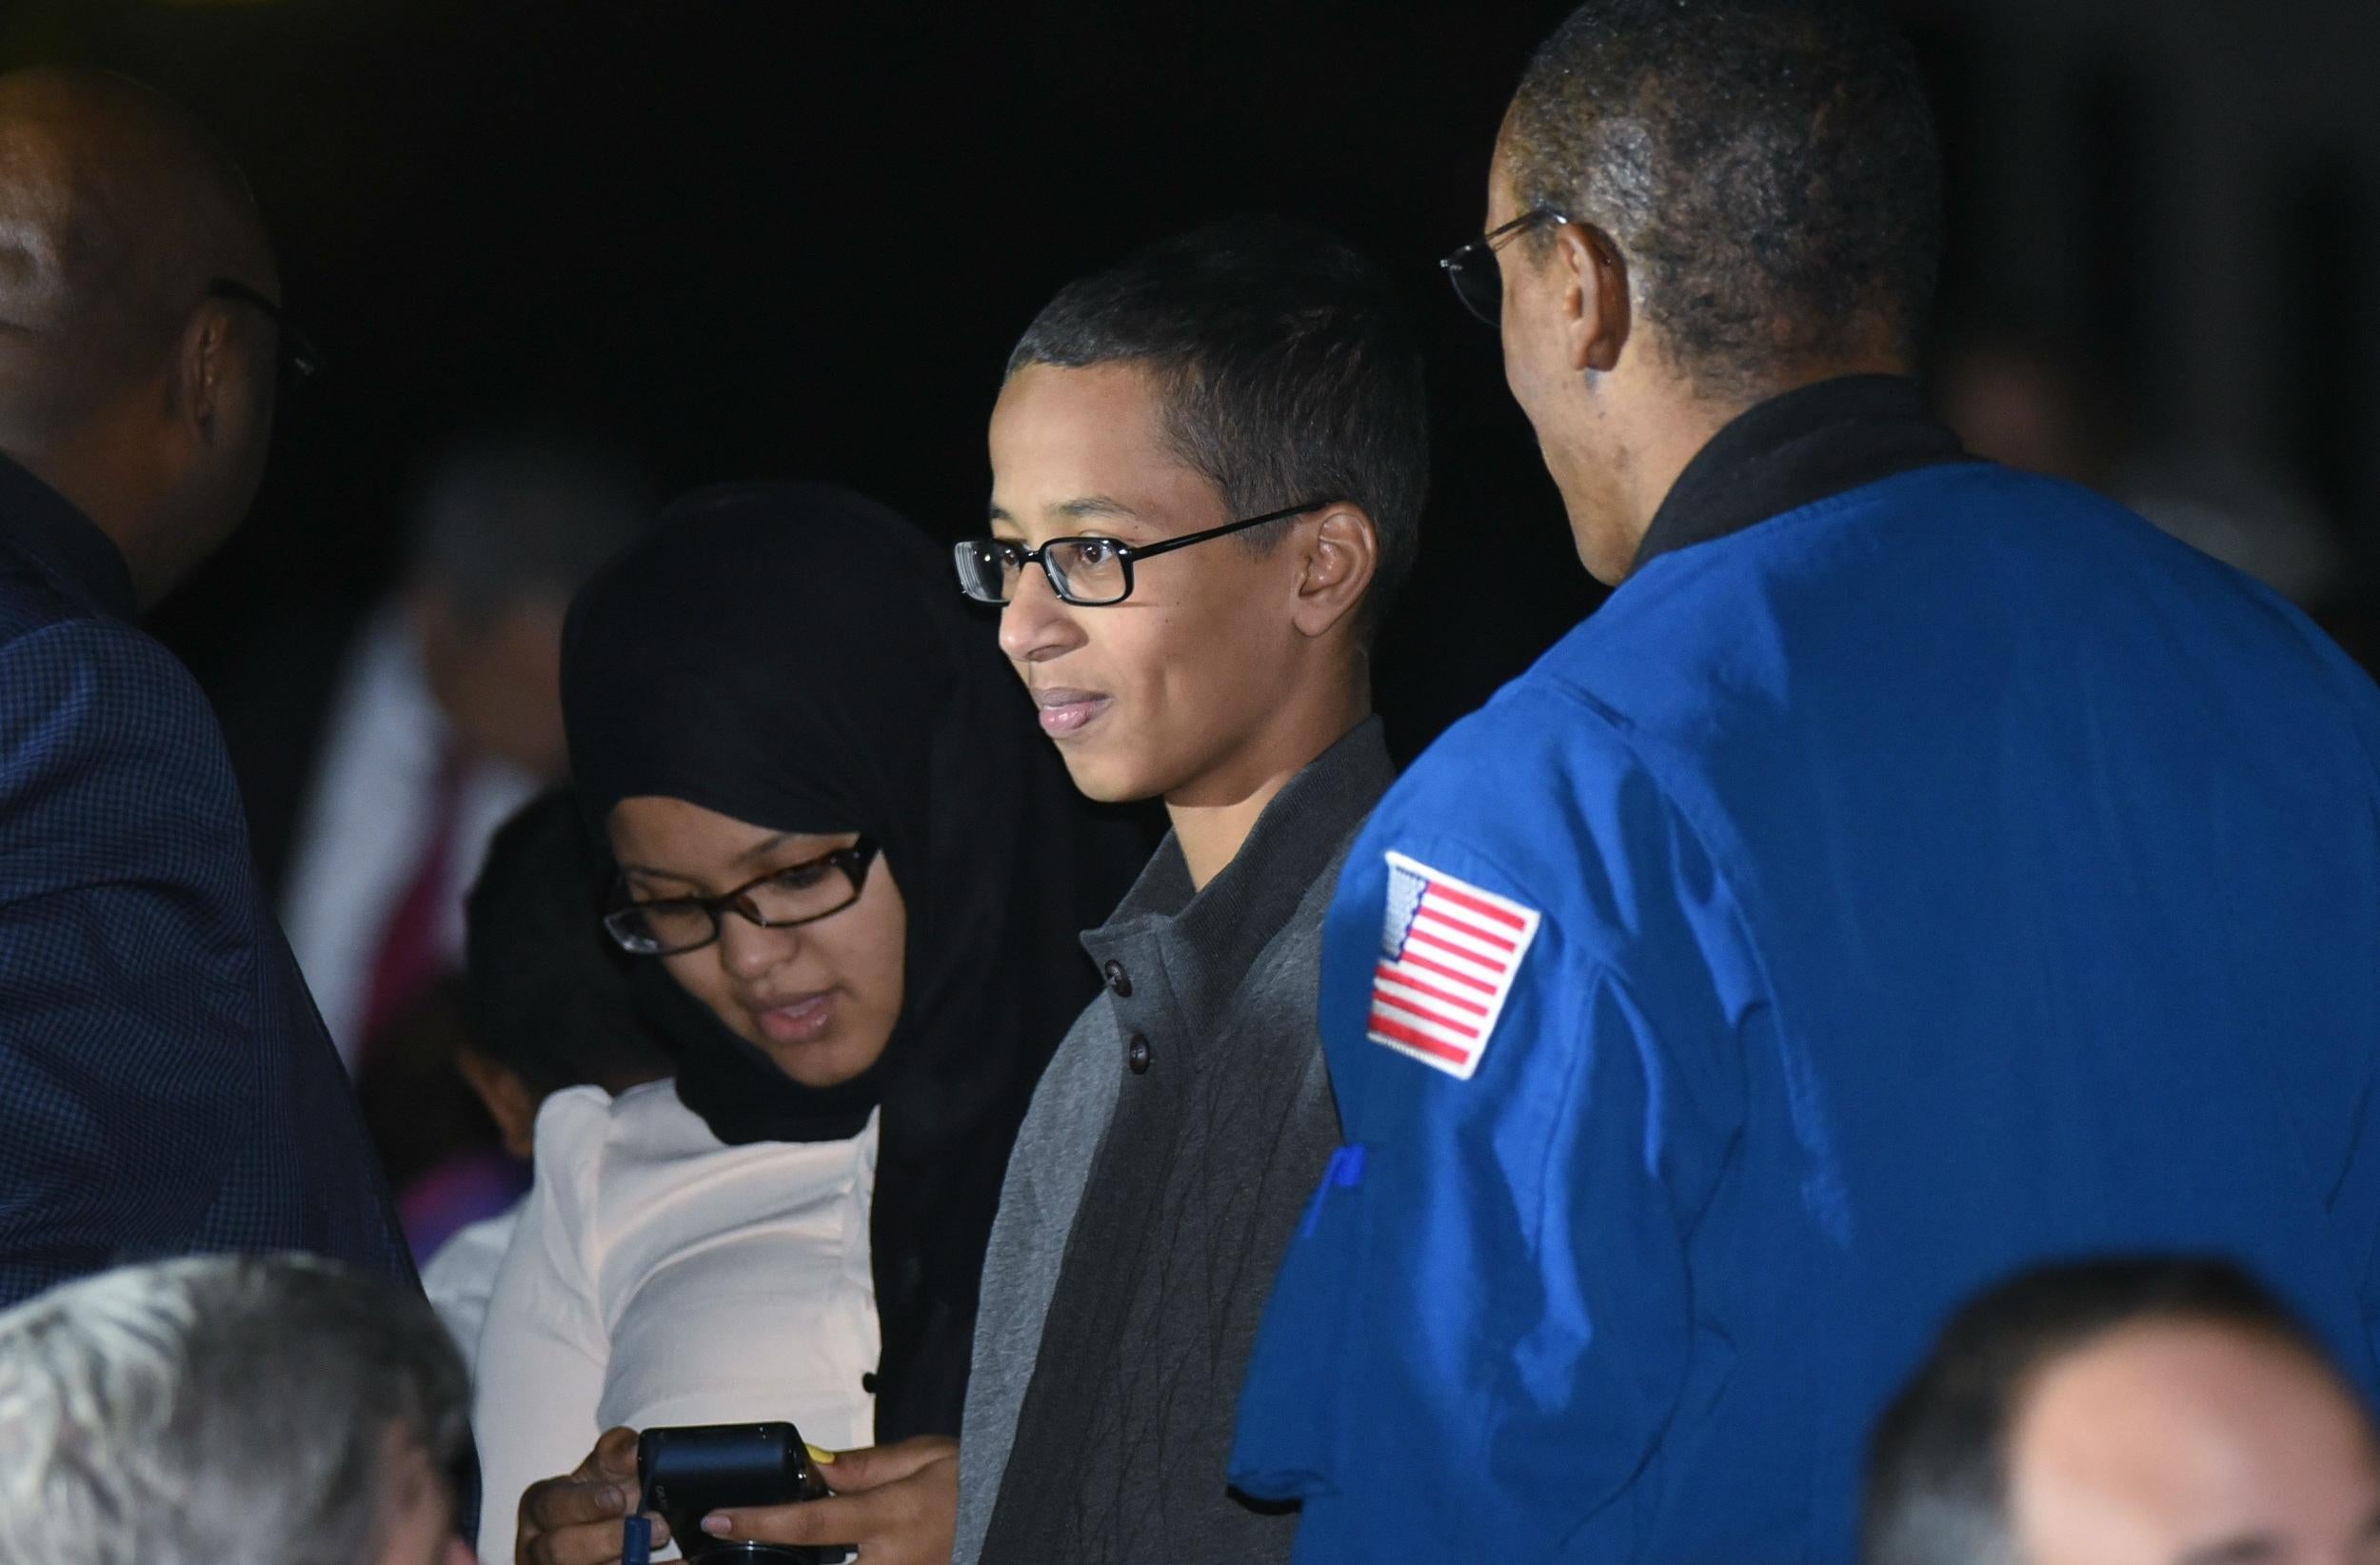 Ahmed Mohamed enjoys Astronomy Night at the White House